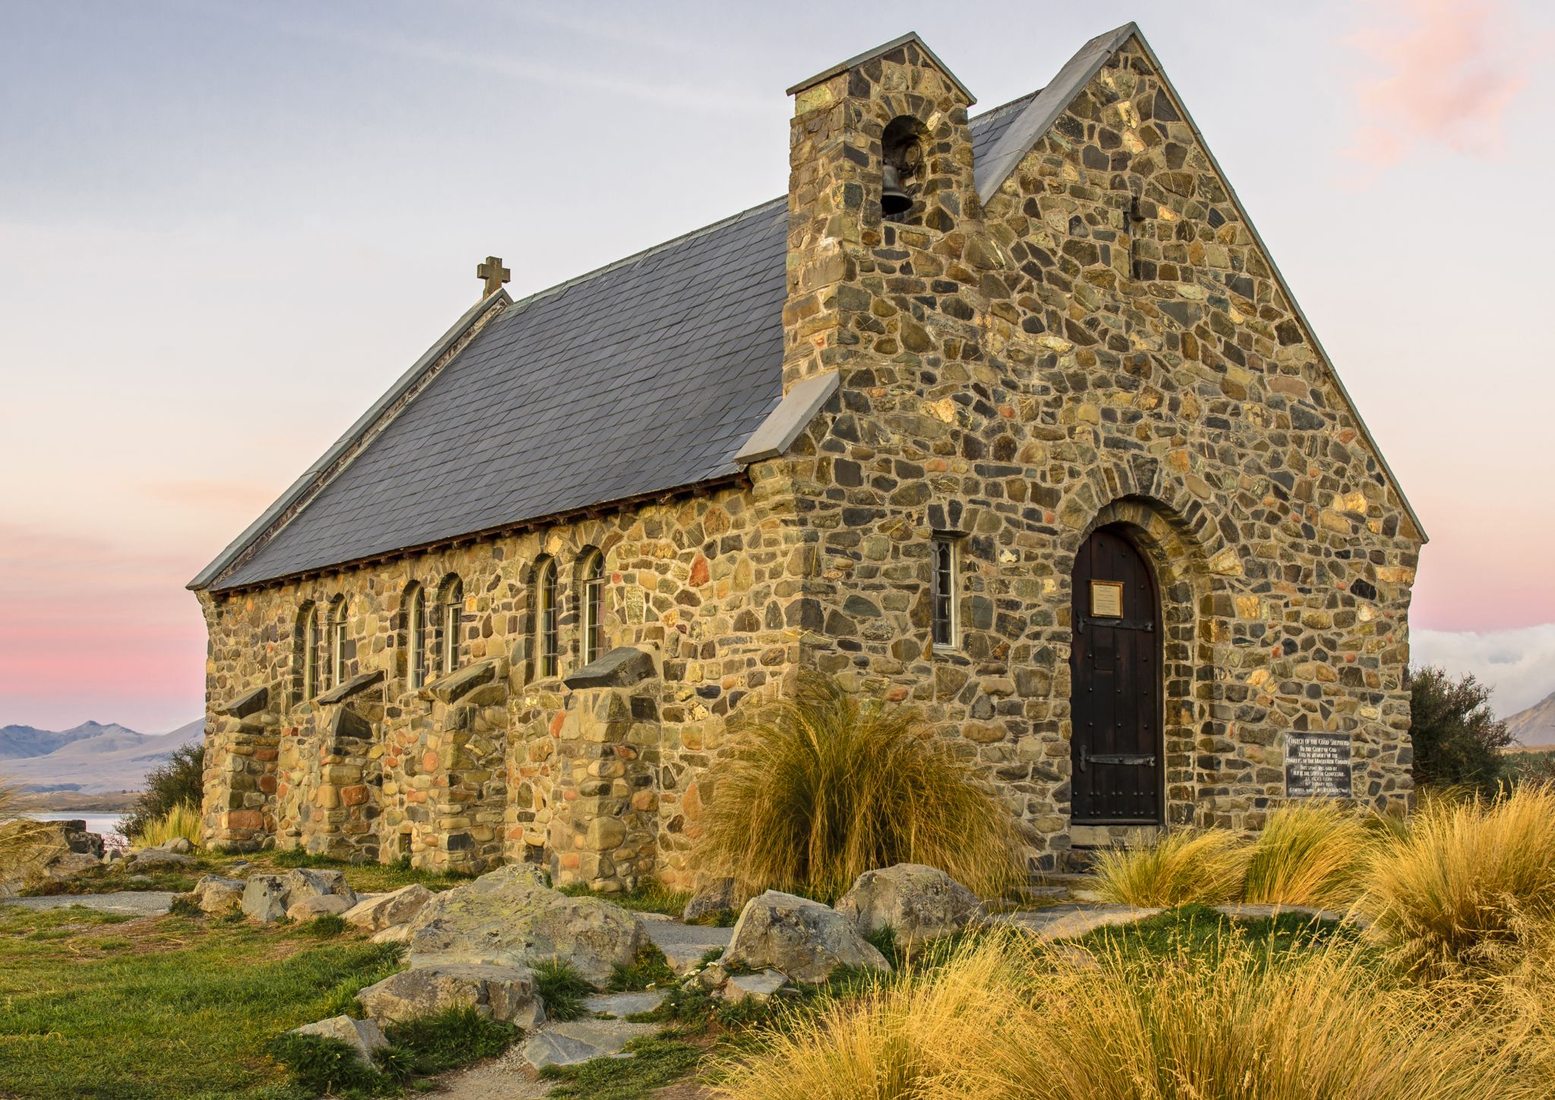 Church of the Good Shepherd, New Zealand